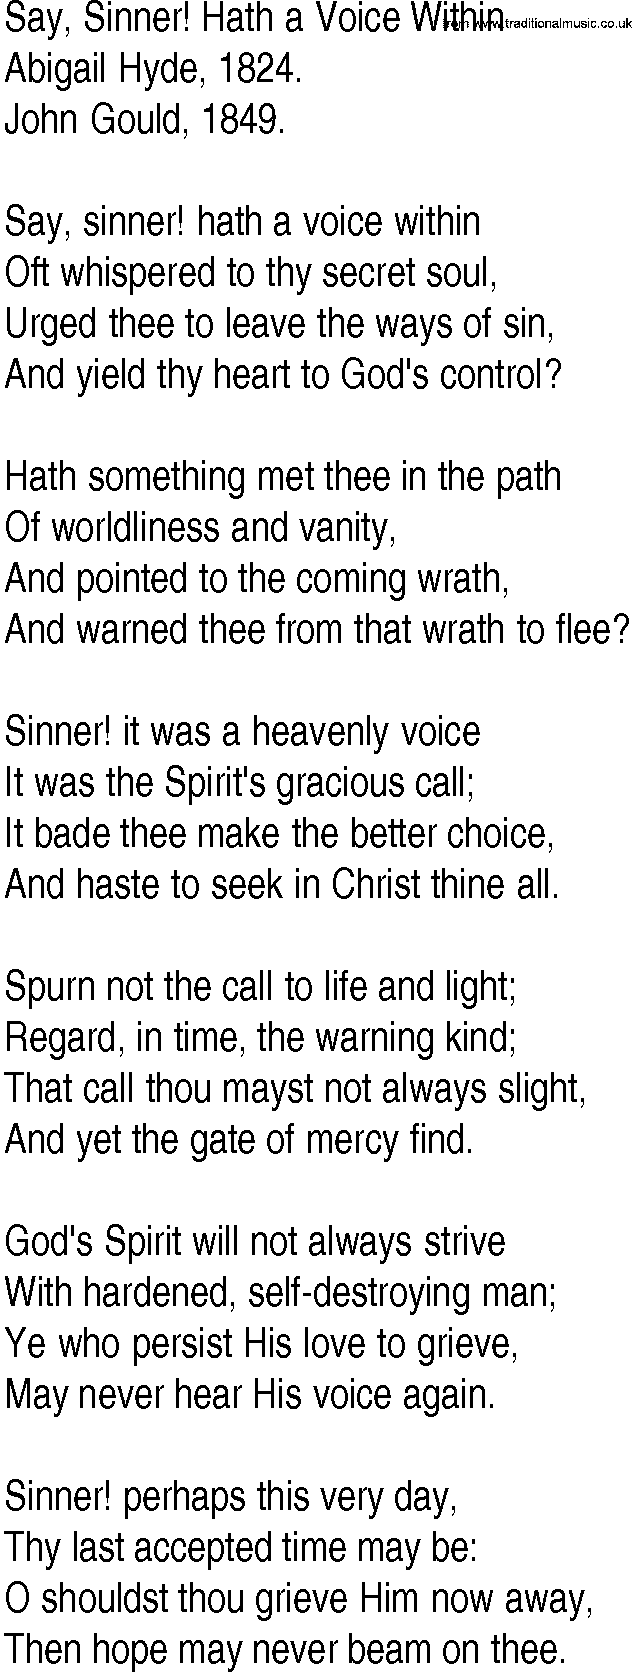 Hymn and Gospel Song: Say, Sinner! Hath a Voice Within by Abigail Hyde lyrics